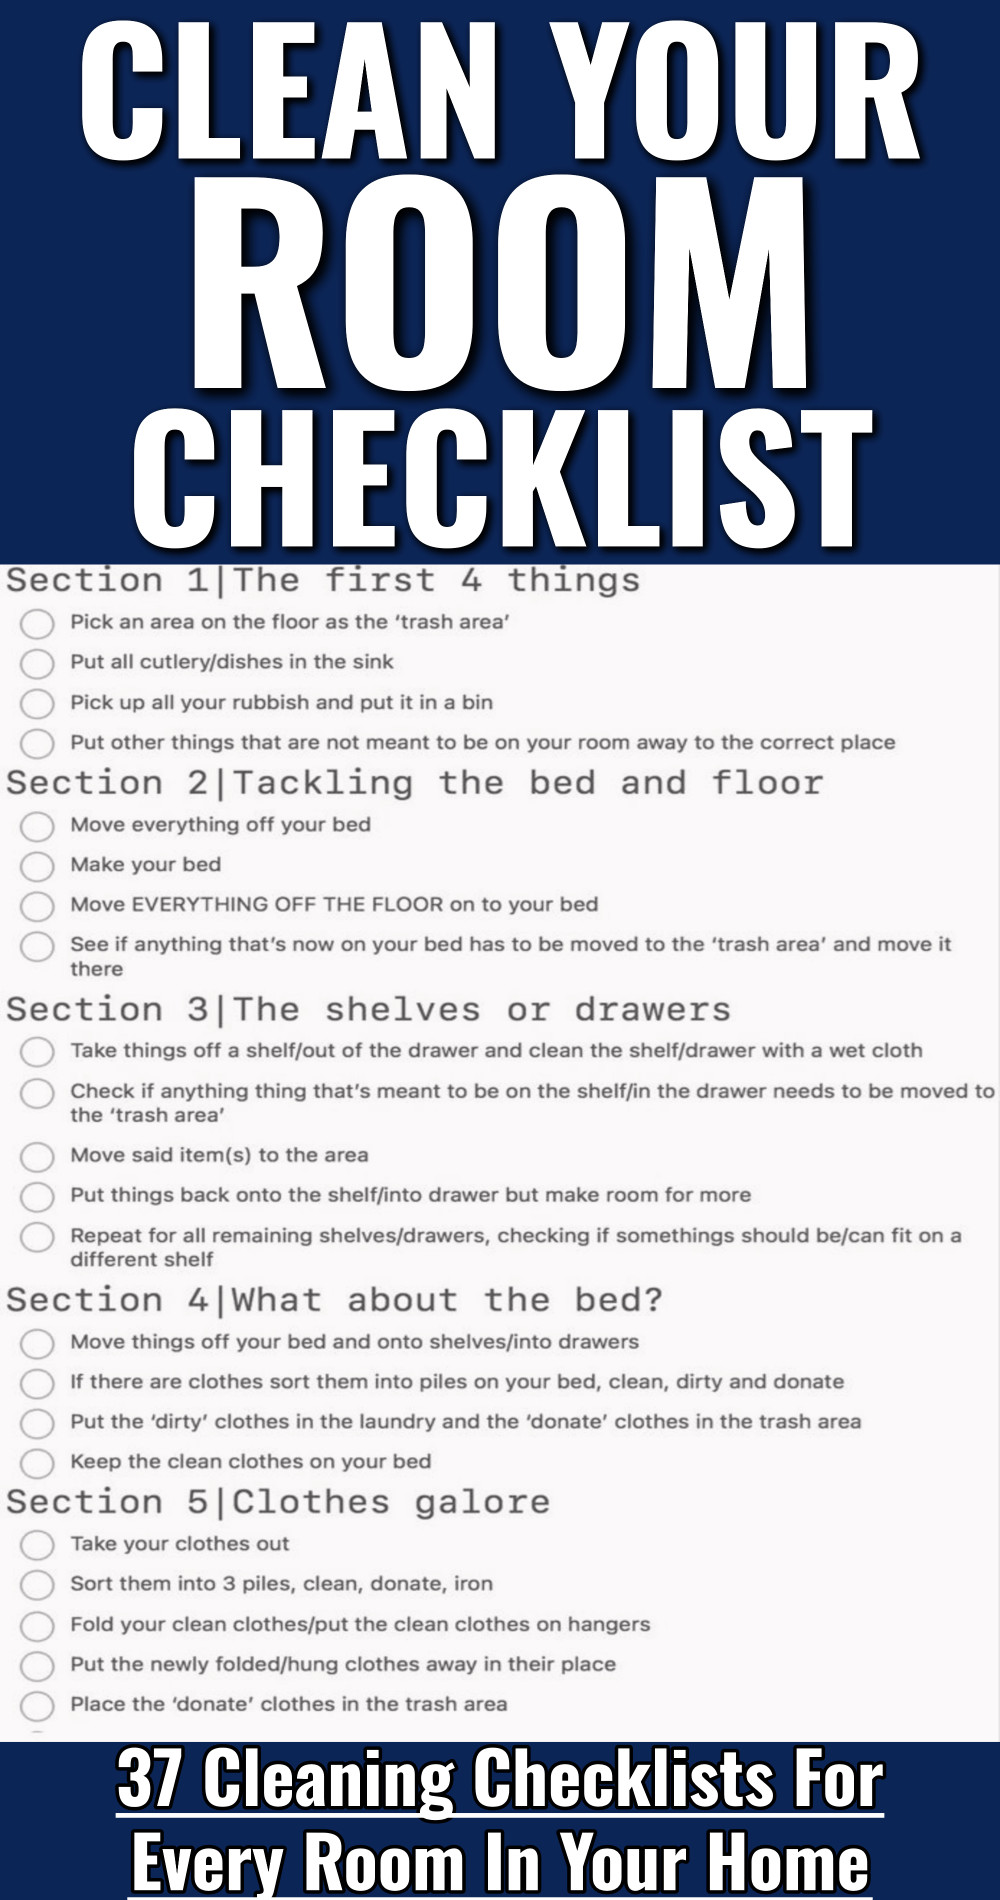 Clean your room checklist